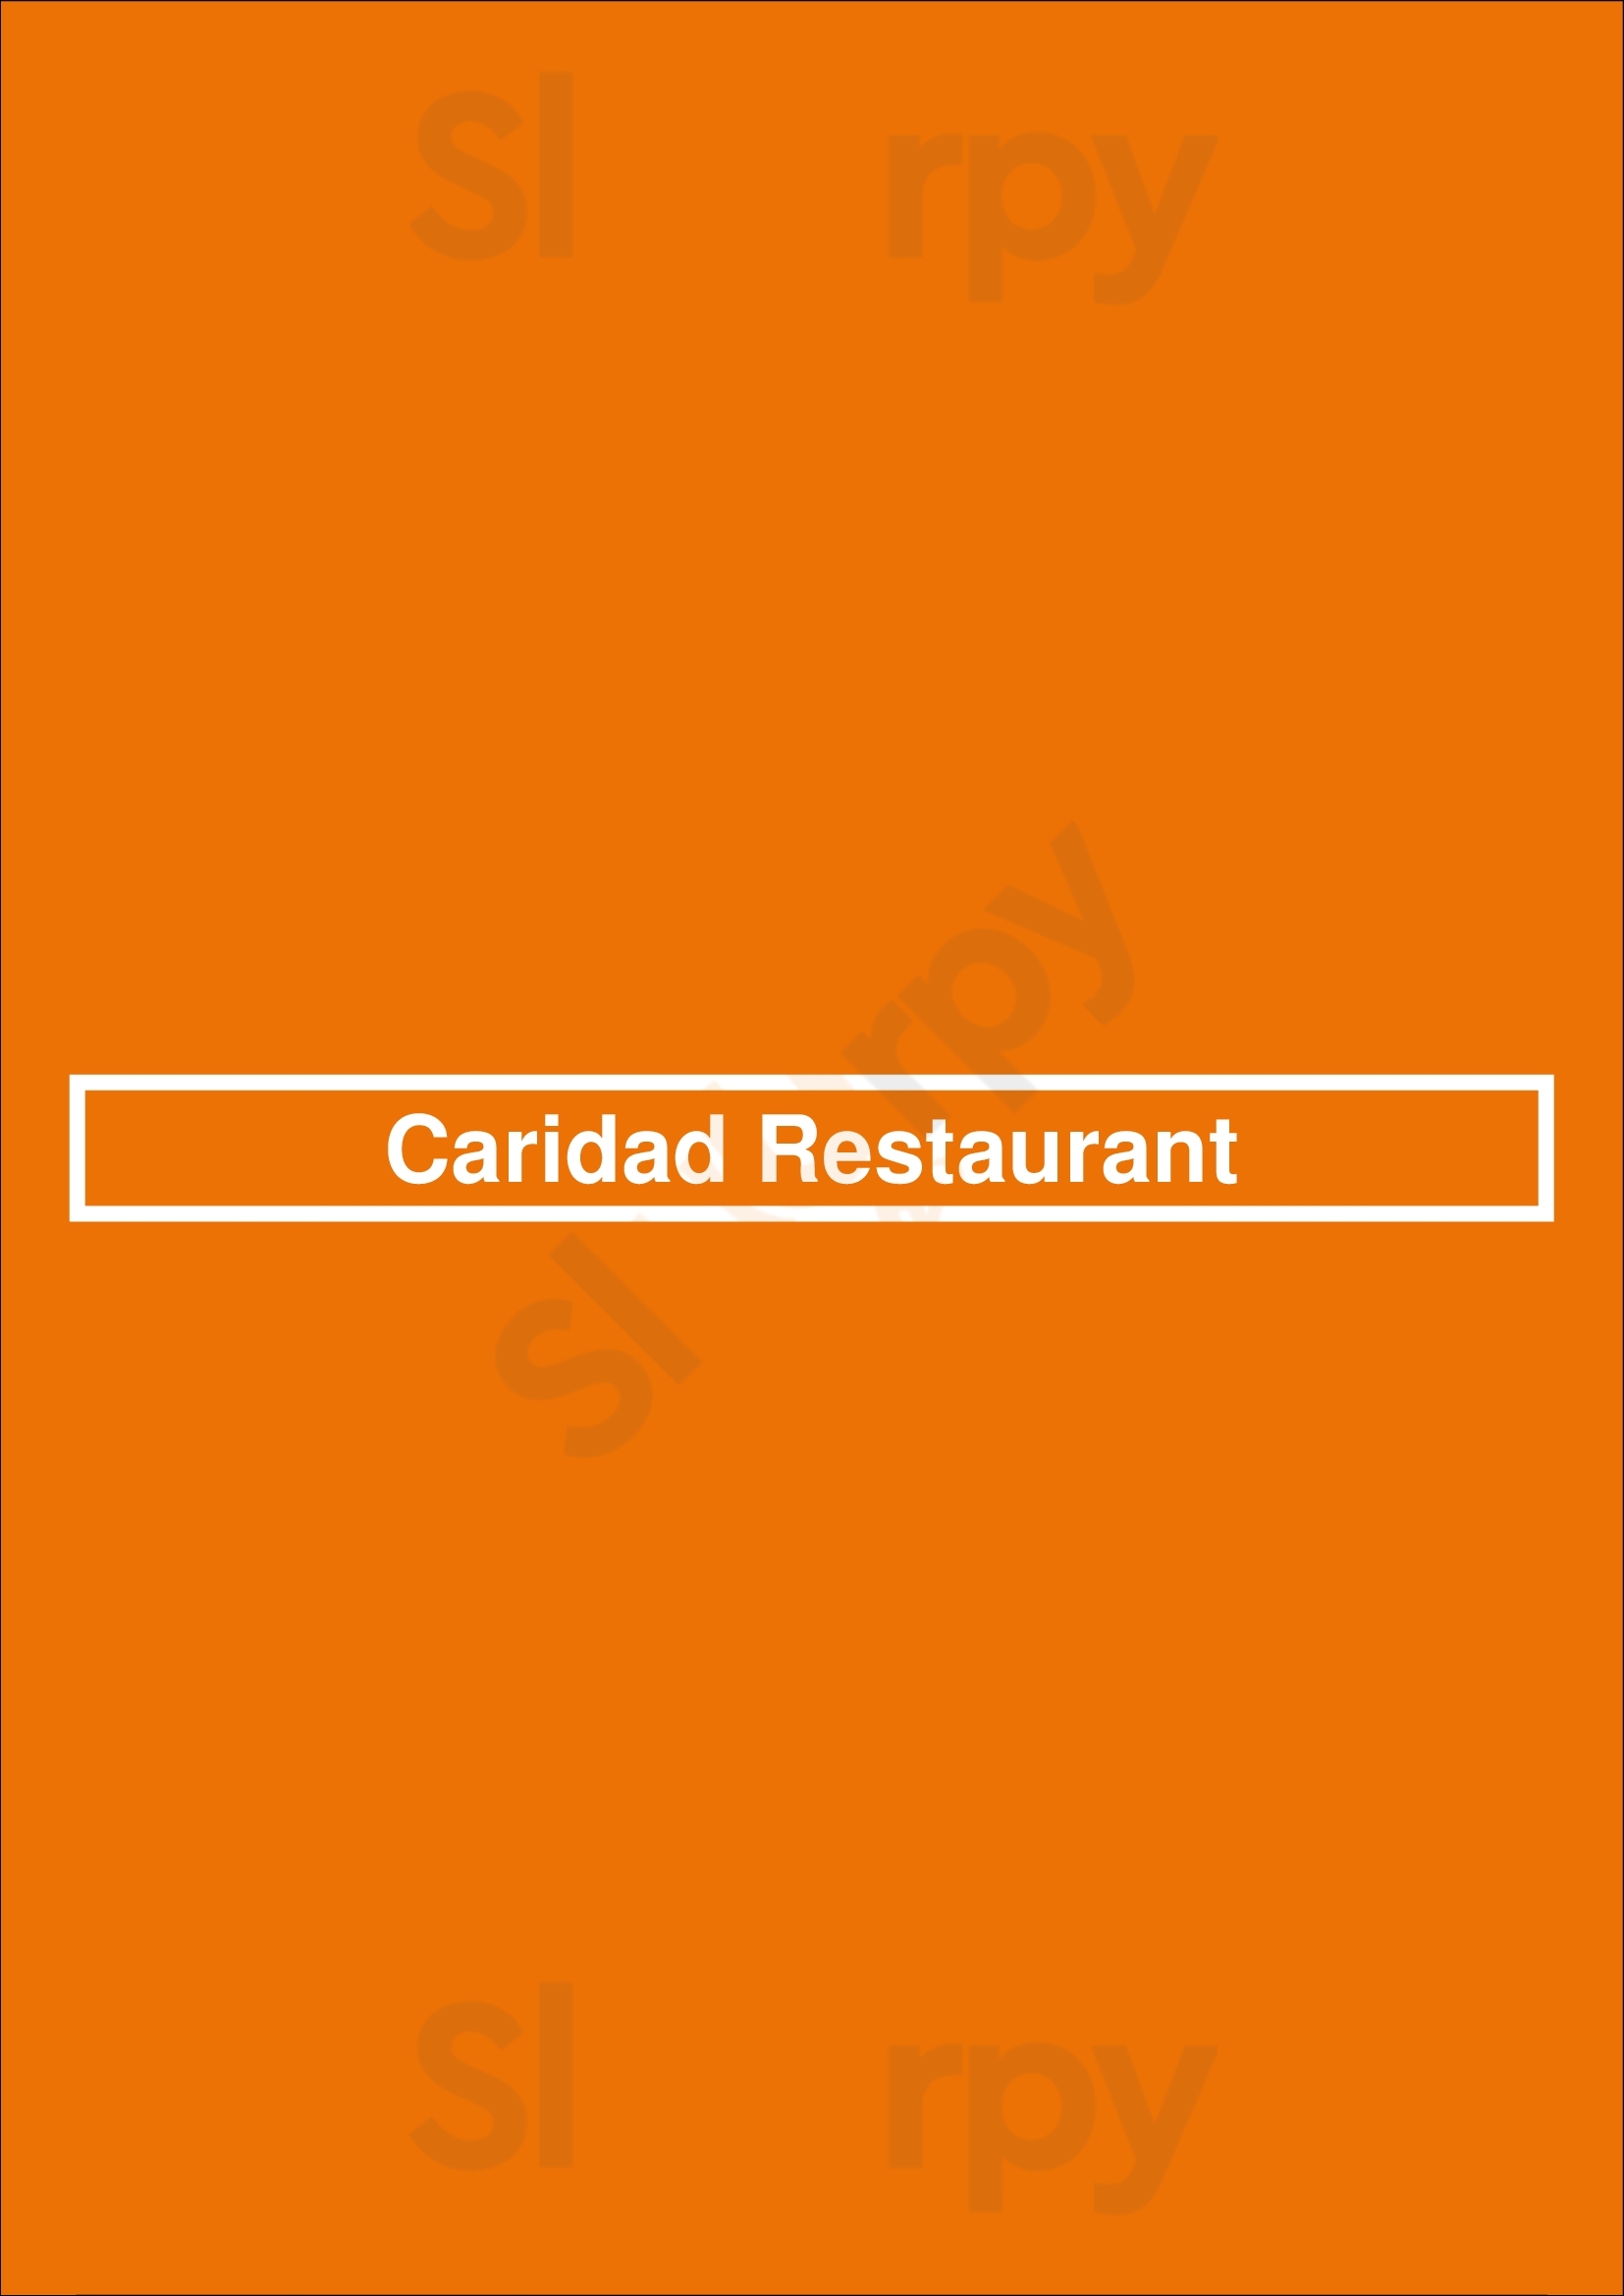 Caridad Restaurant New York City Menu - 1